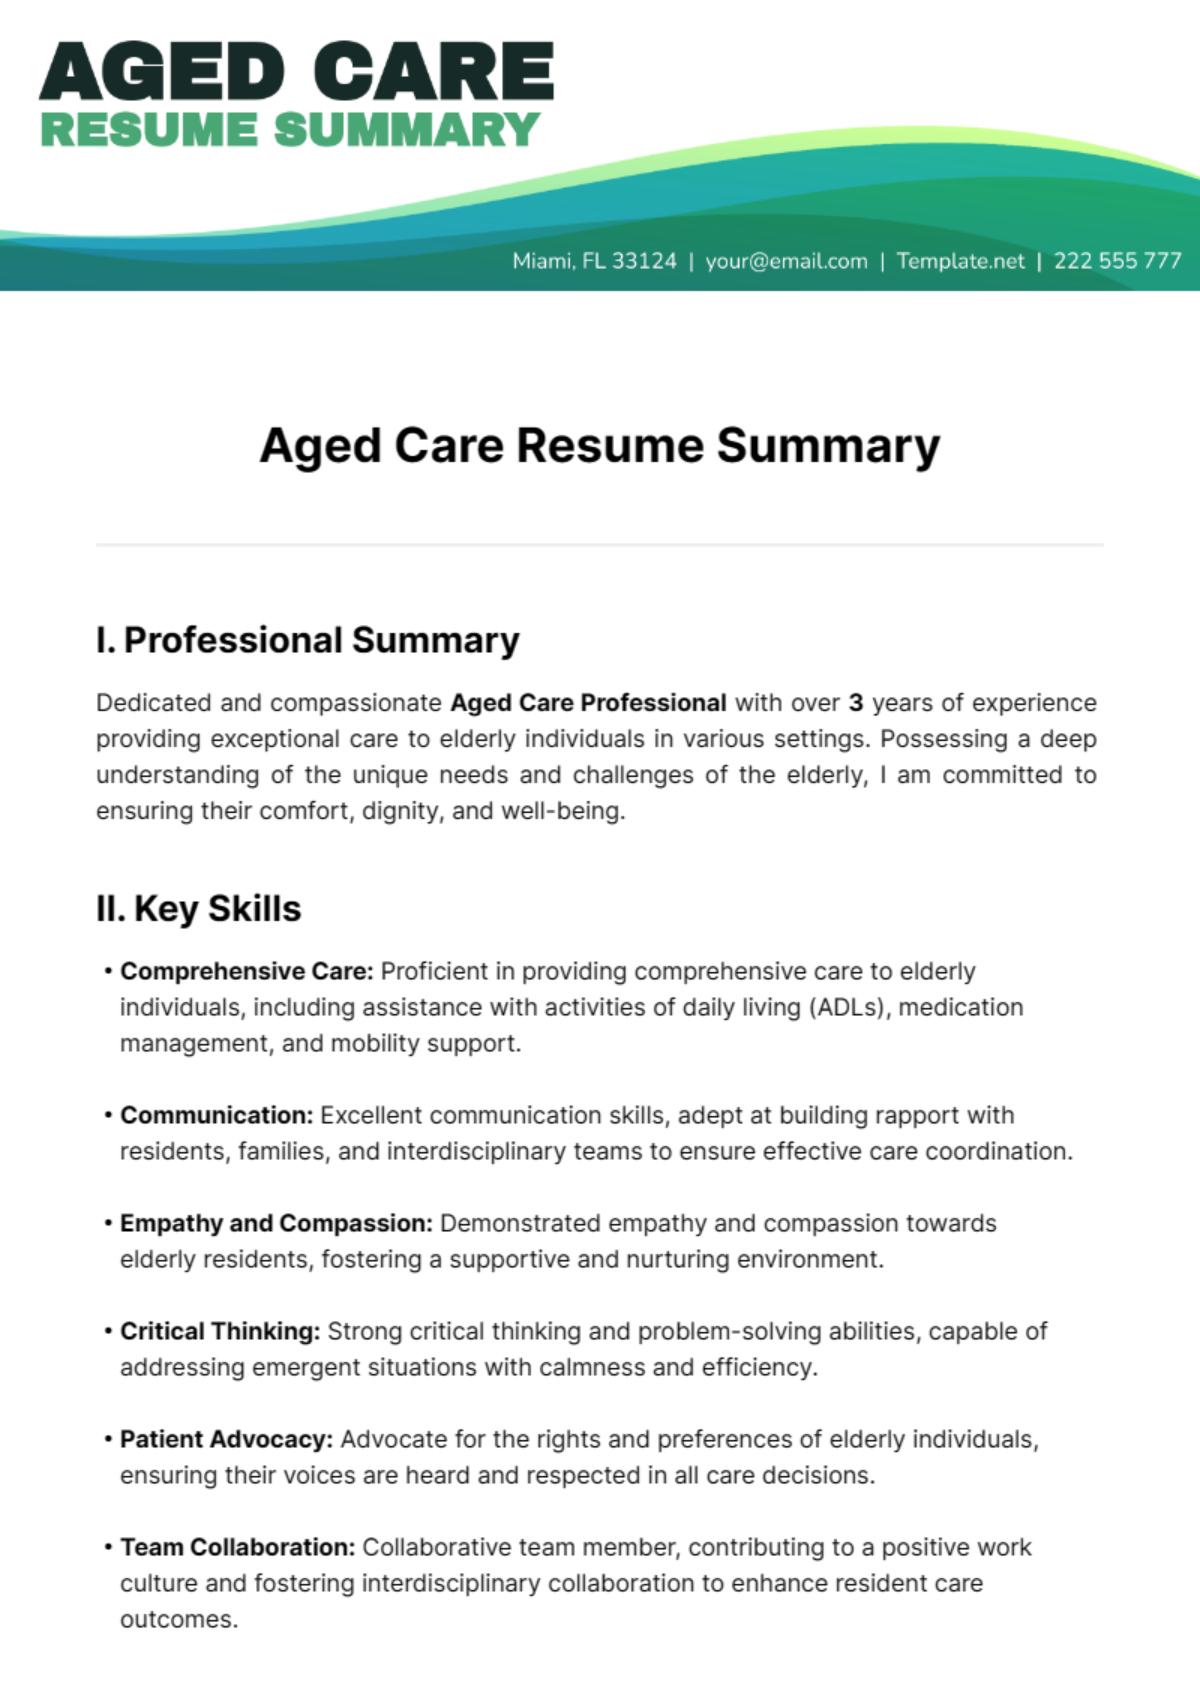 Aged Care Resume Summary Template